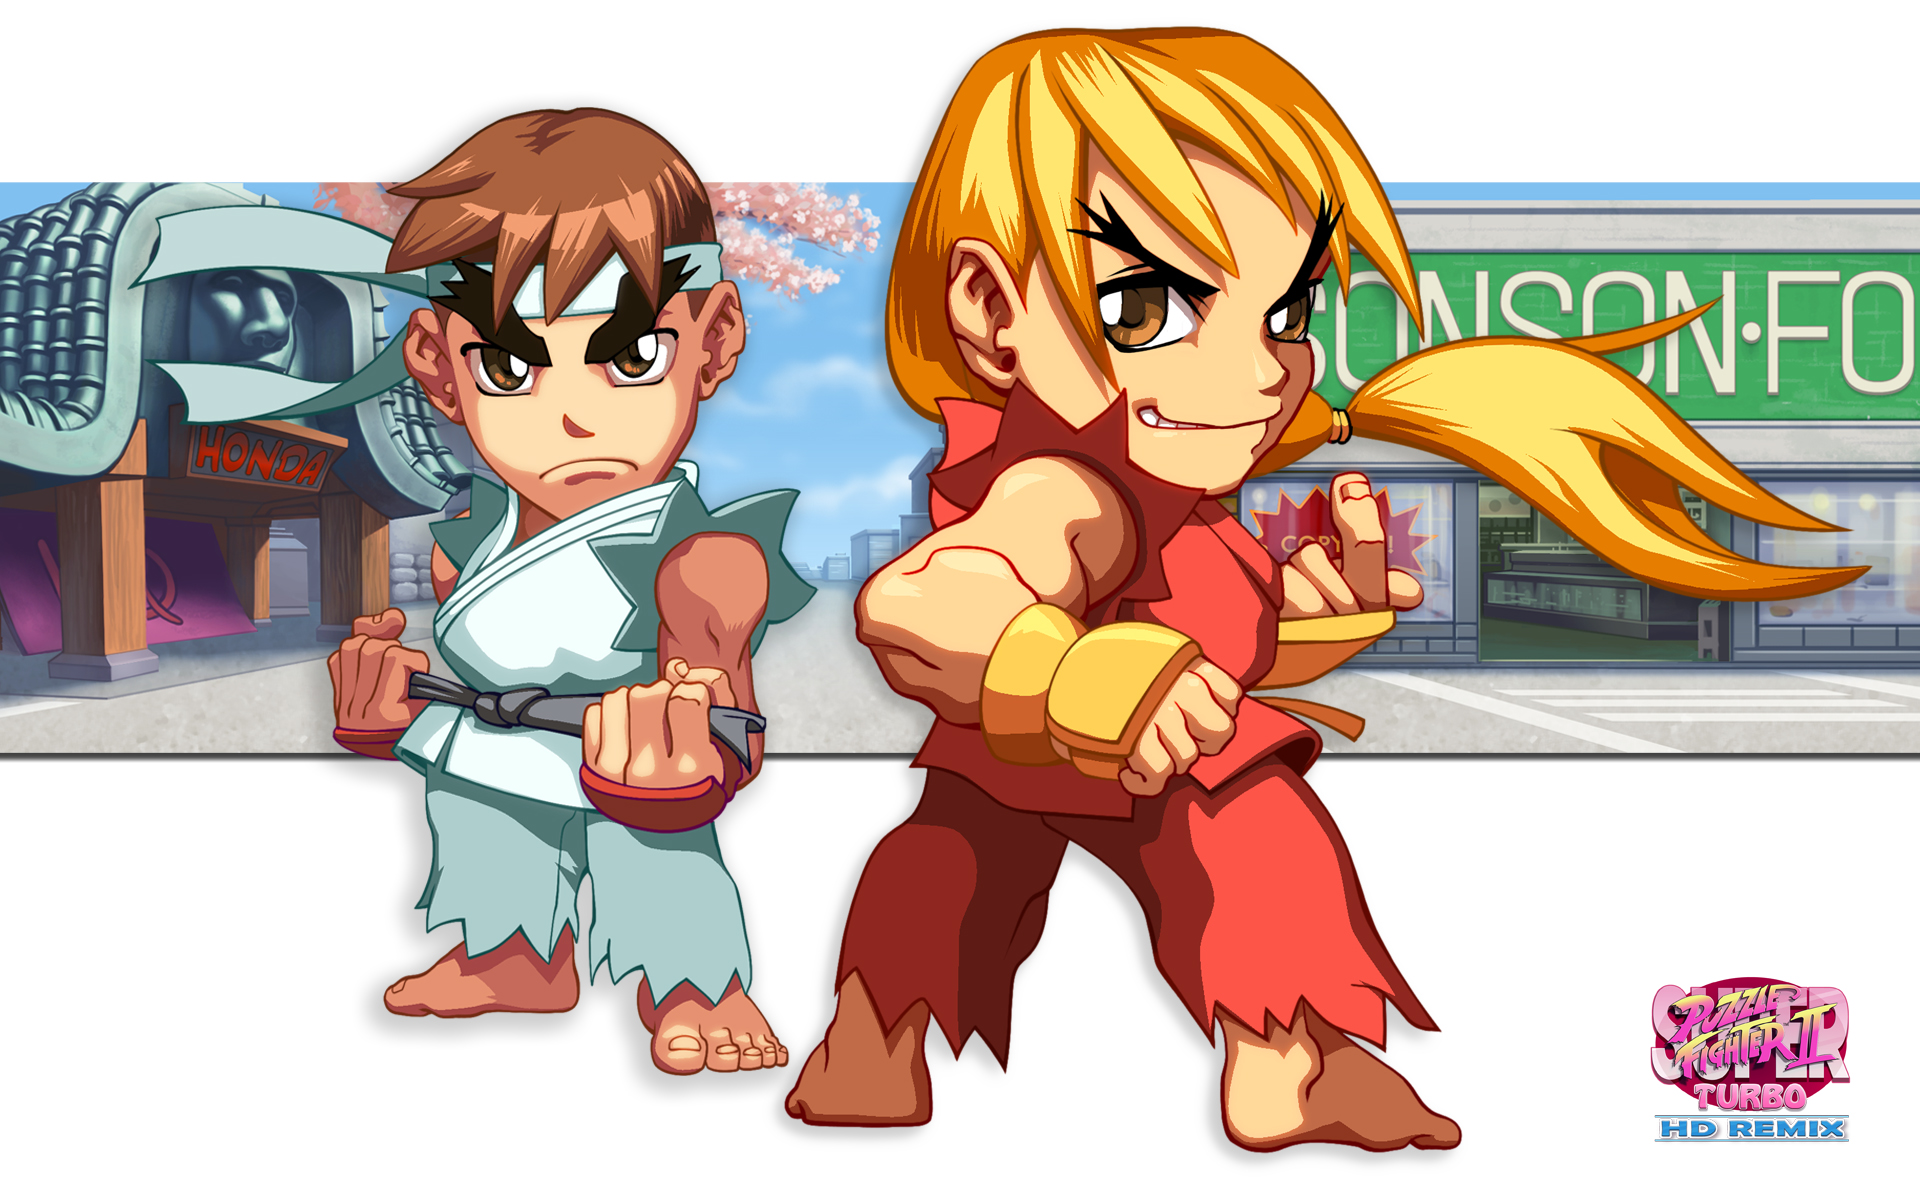 Ryu from Street Fighter in high definition desktop wallpaper.